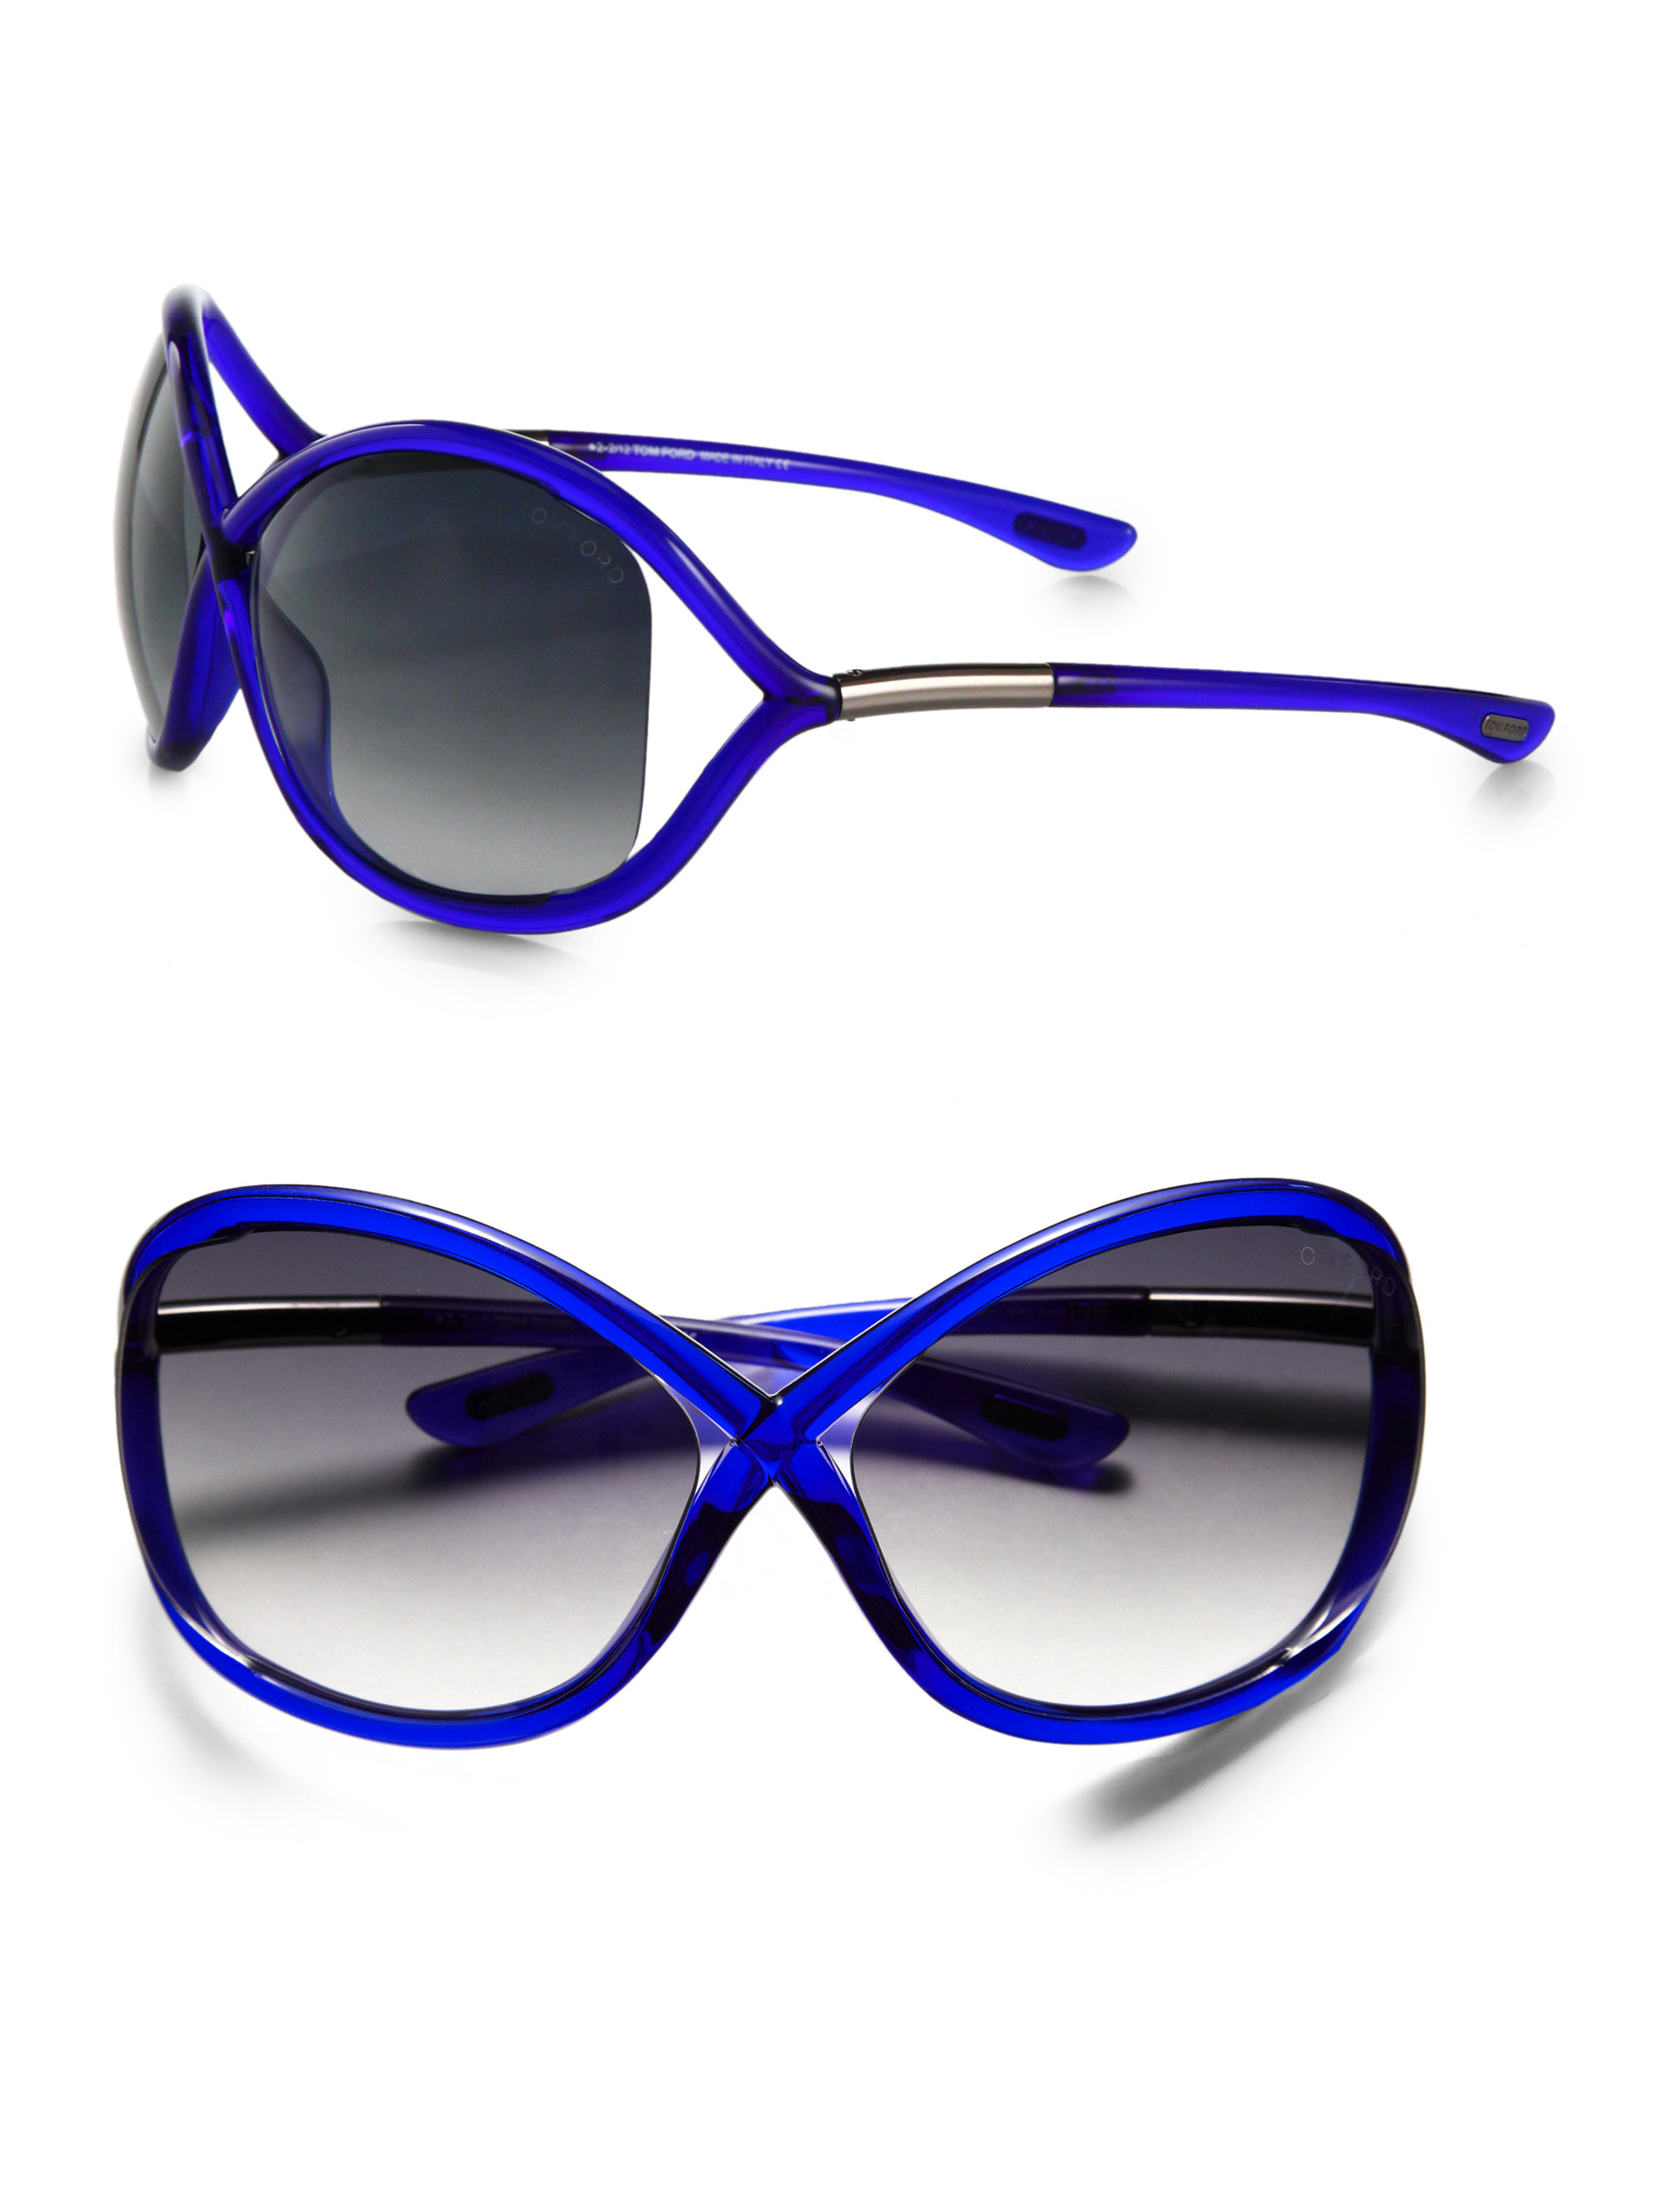 Tom ford sunglasses whitney blue #9